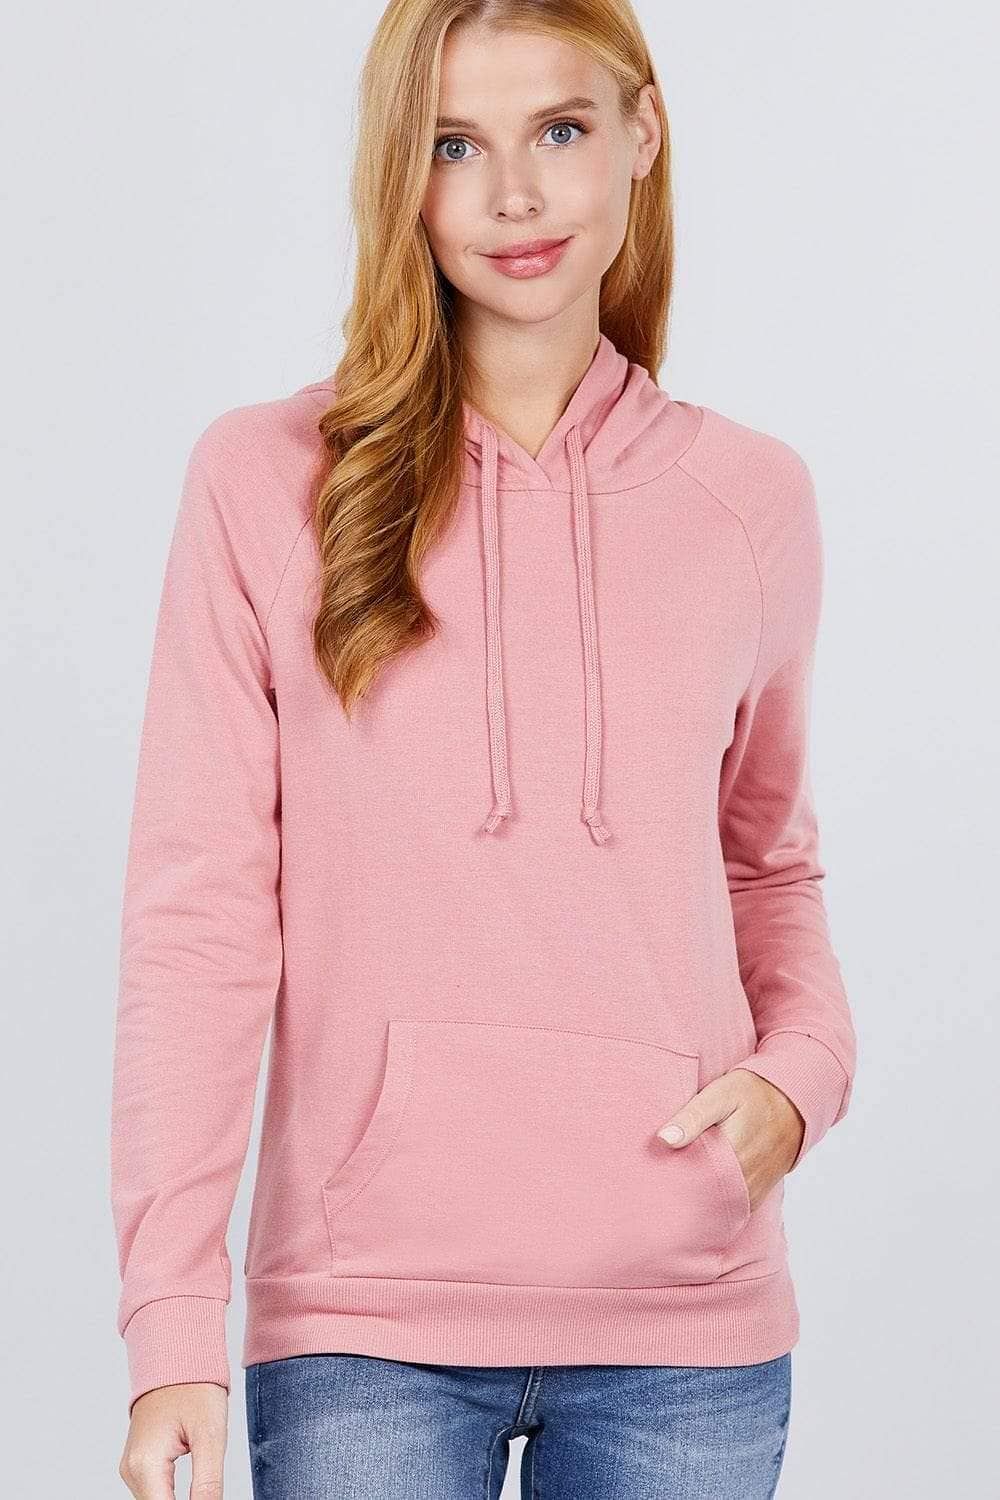 Pink French Terry Long Sleeve Sweatshirt - Shopping Therapy S Sweatshirt